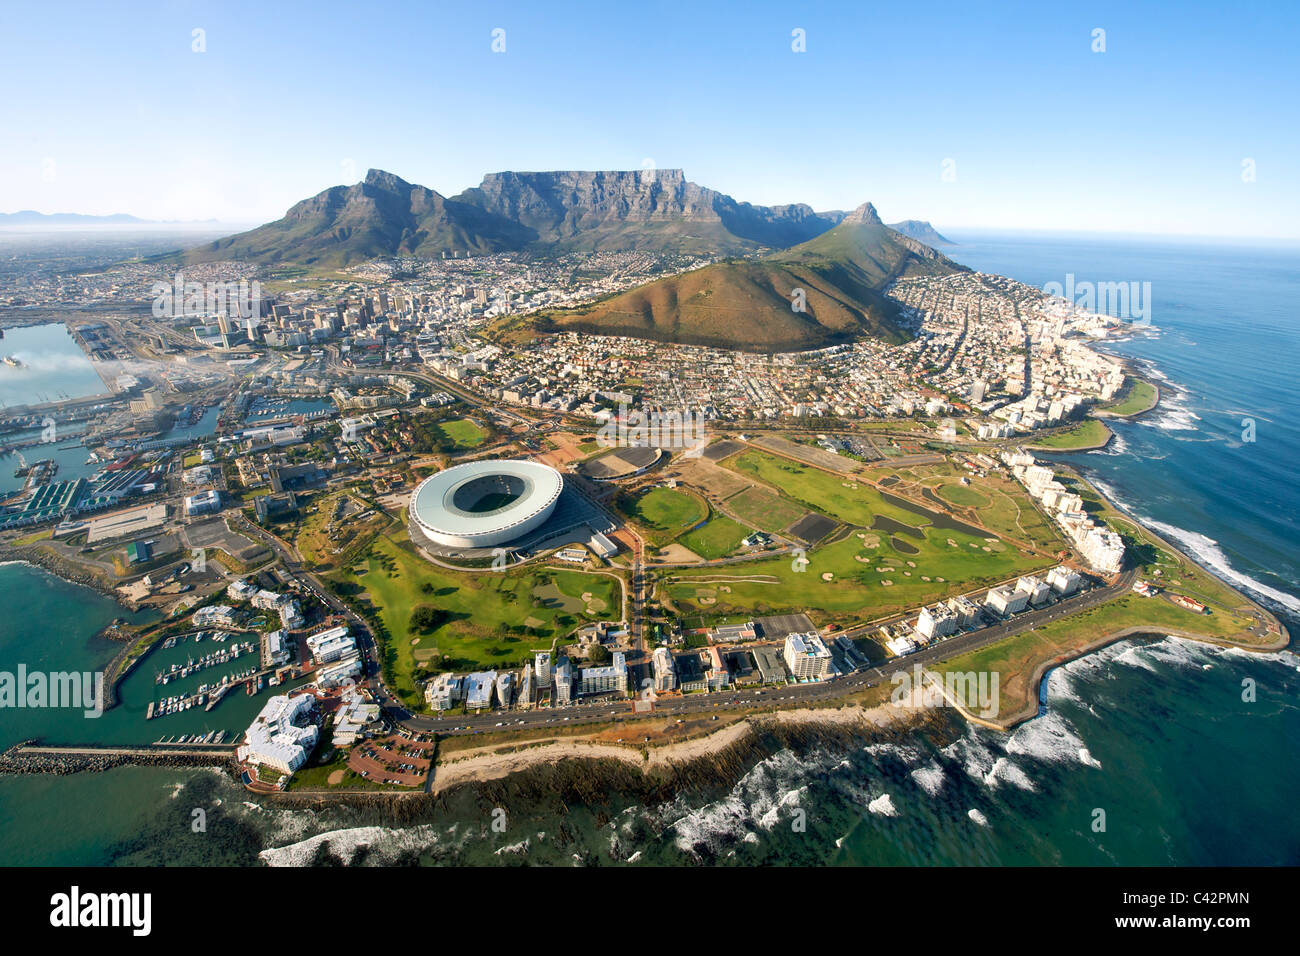 Vista aérea de la ciudad de Cape Town, Sudáfrica. Foto de stock